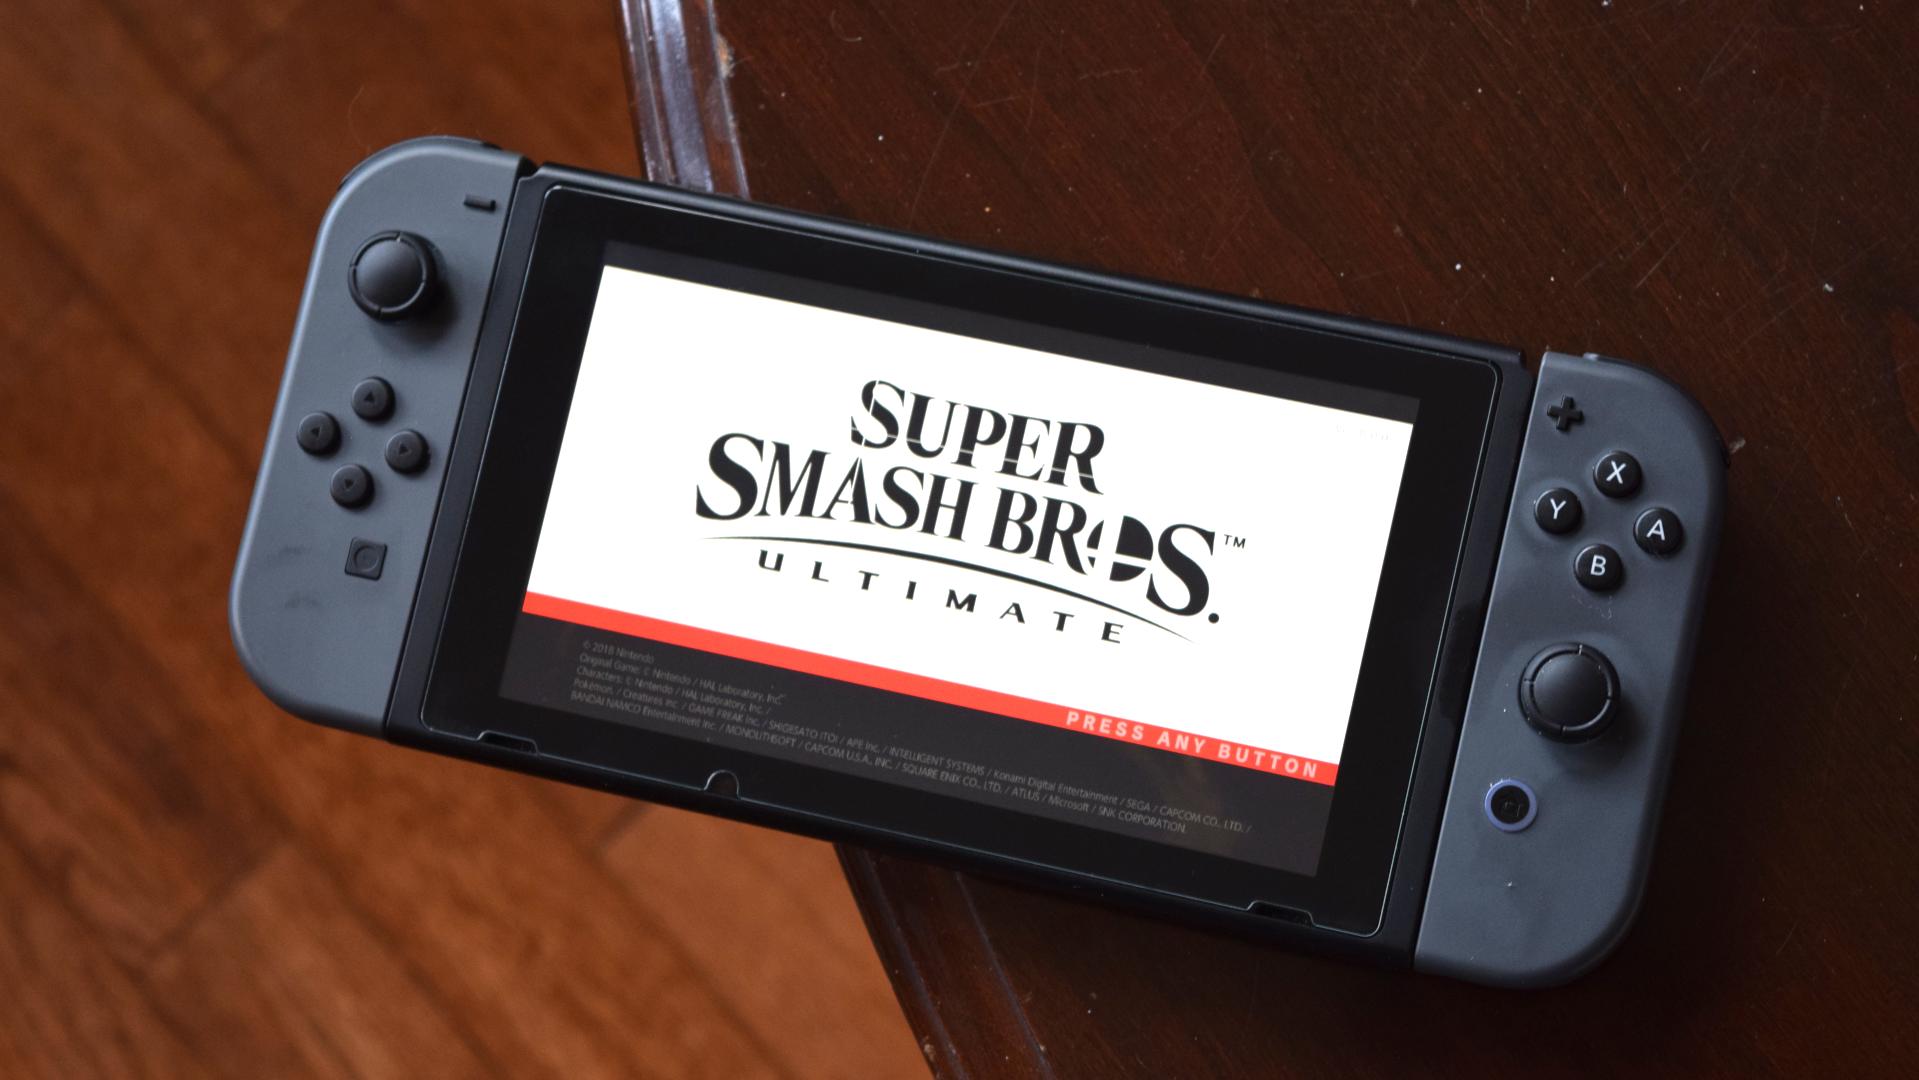 Nintendo Offers Super Smash Bros. Ultimate and Nintendo Switch